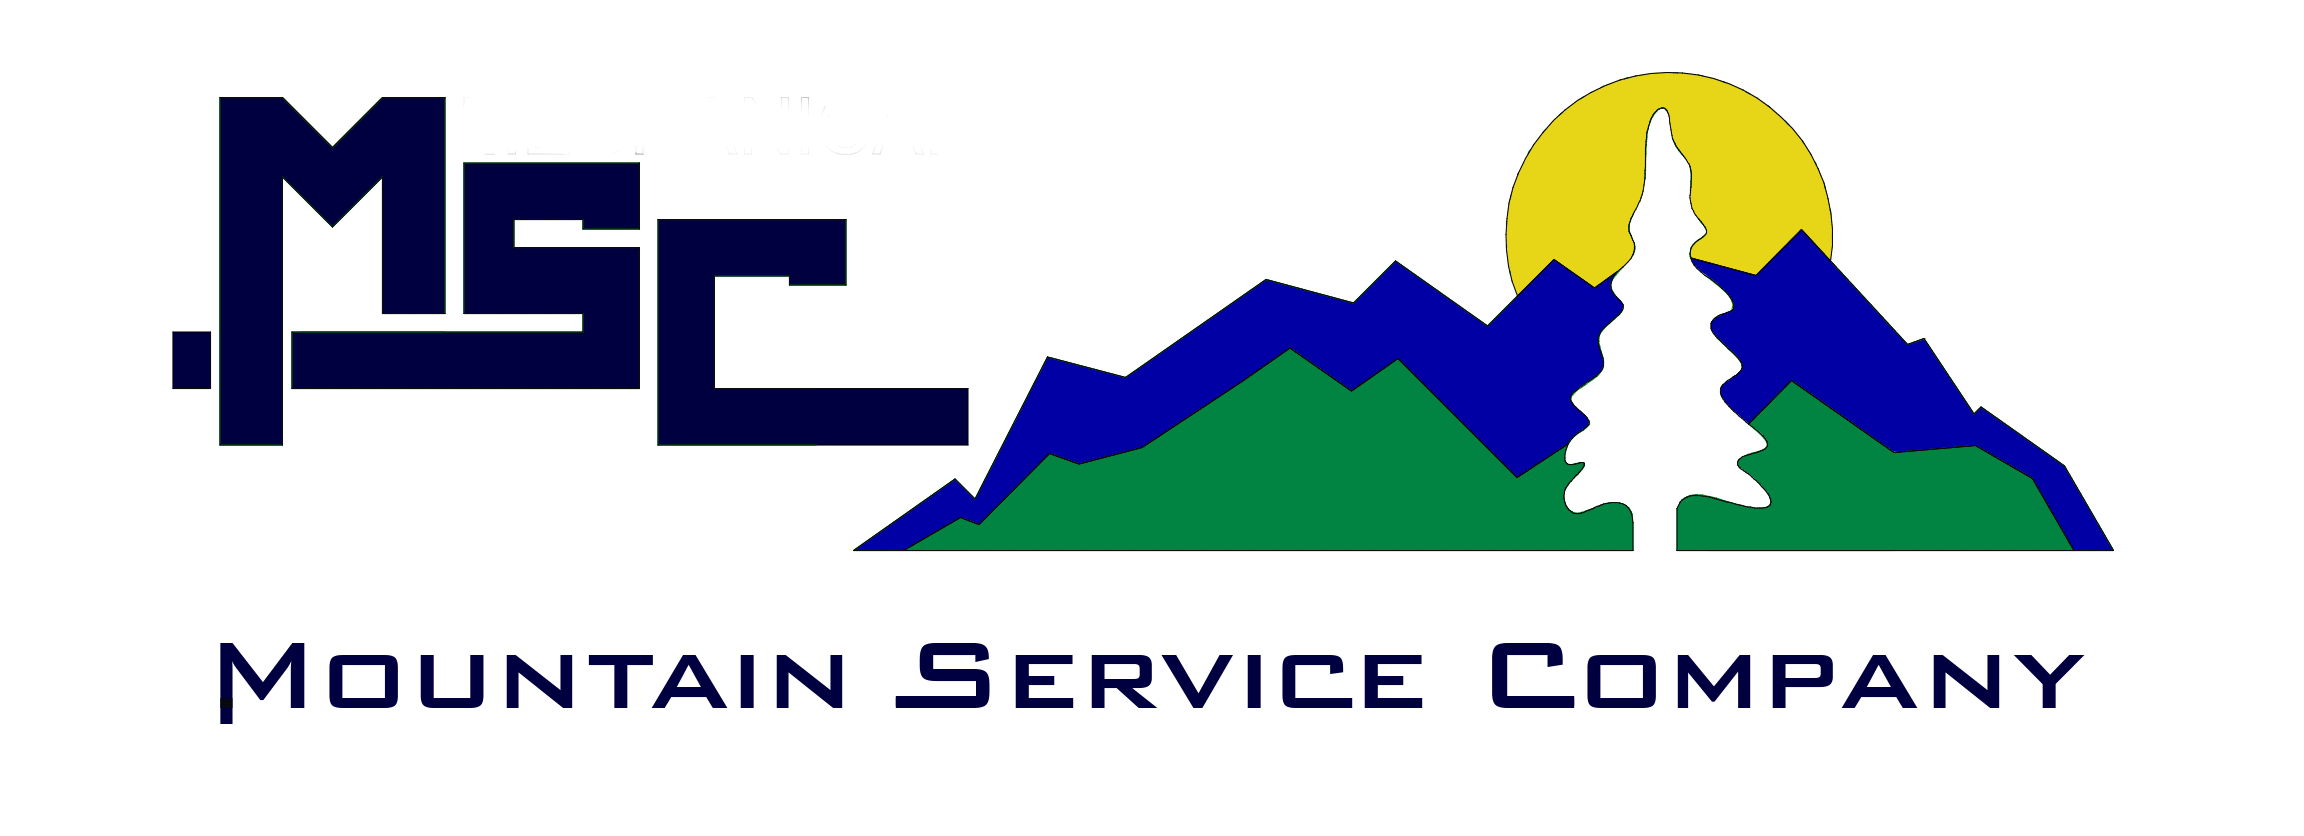 MOUNTAIN SERVICE COMPANY